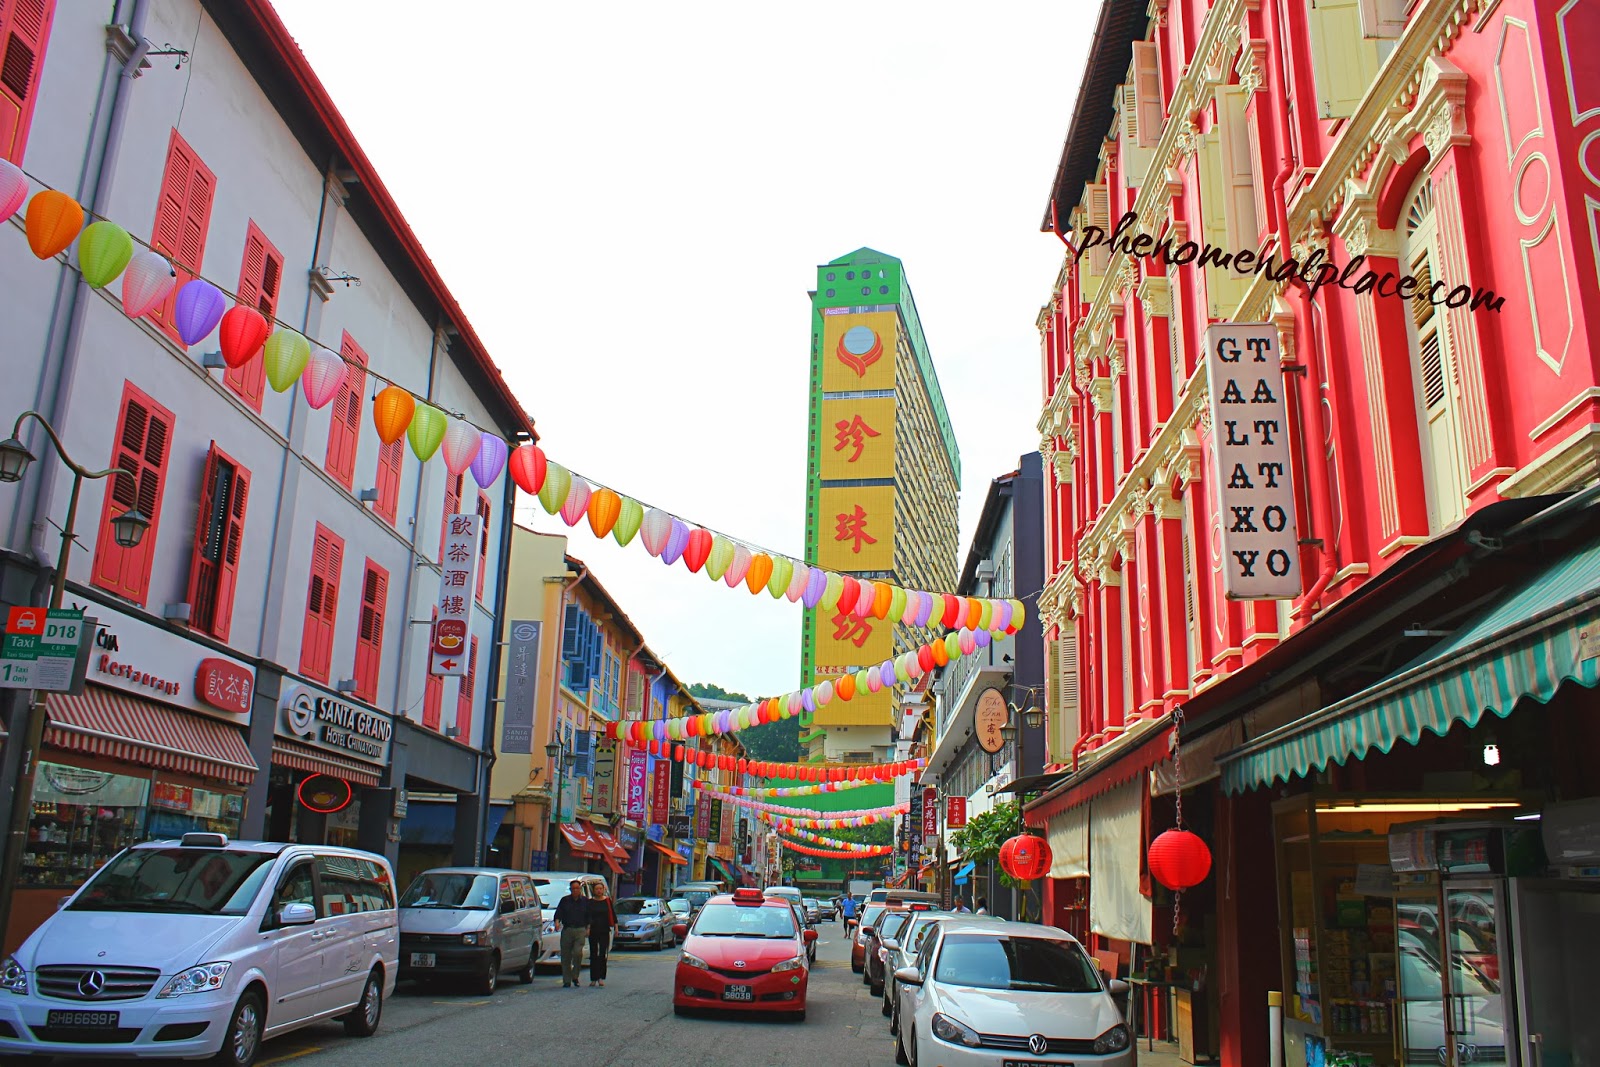 tour of chinatown singapore